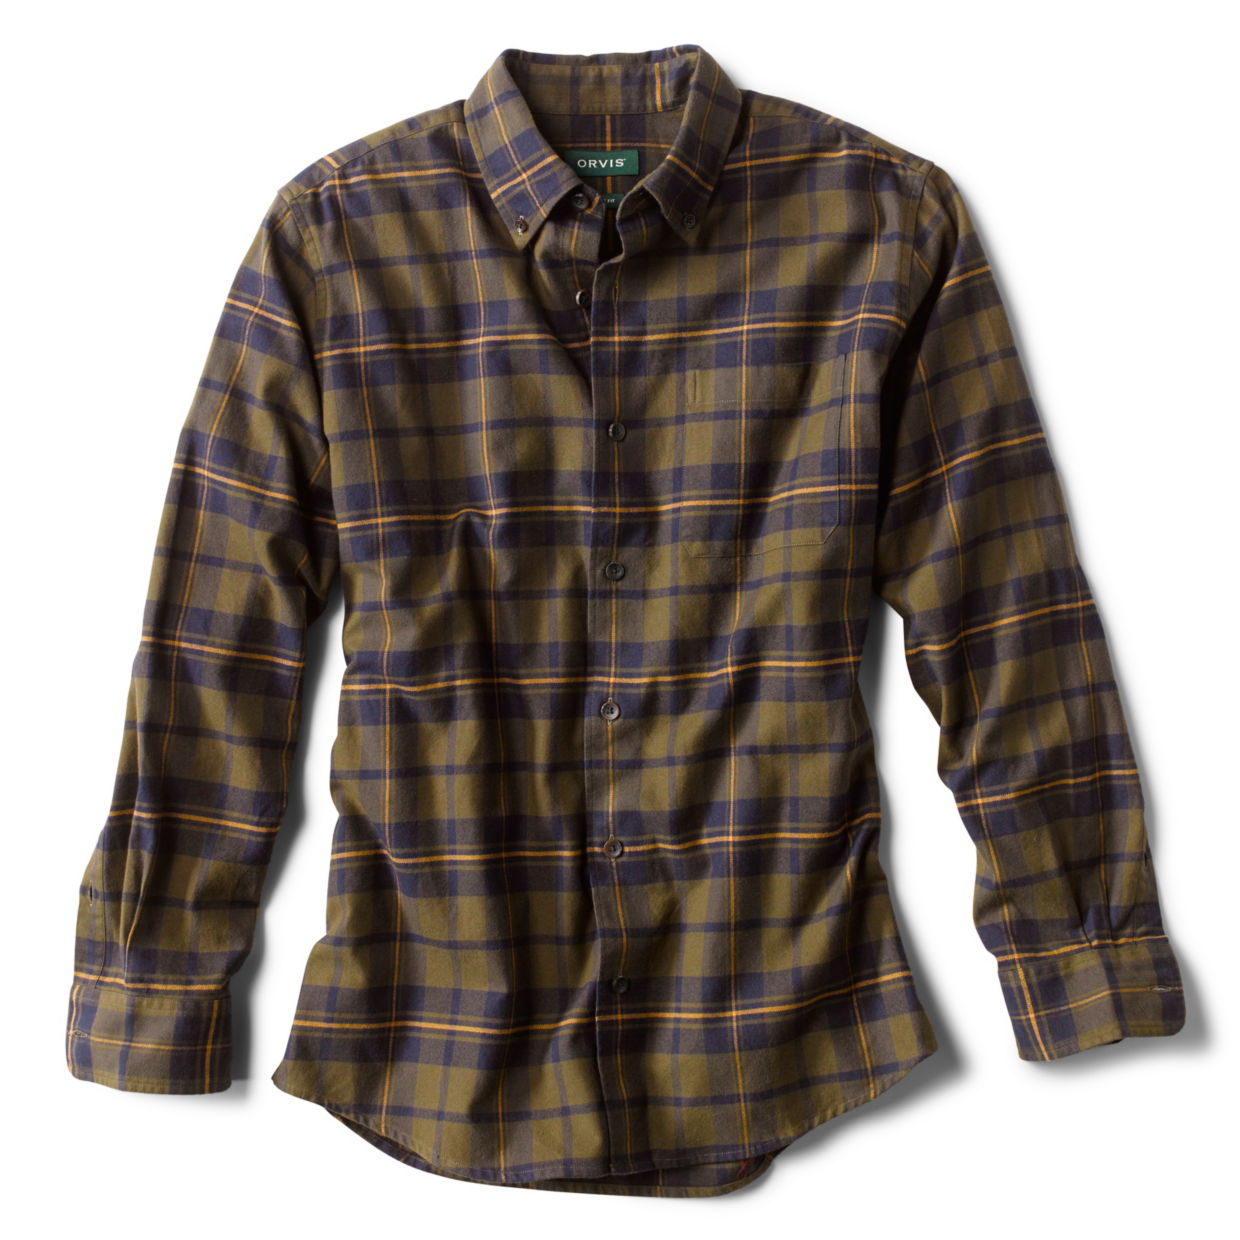 Lodge Flannel Long-Sleeved Shirt - Regular